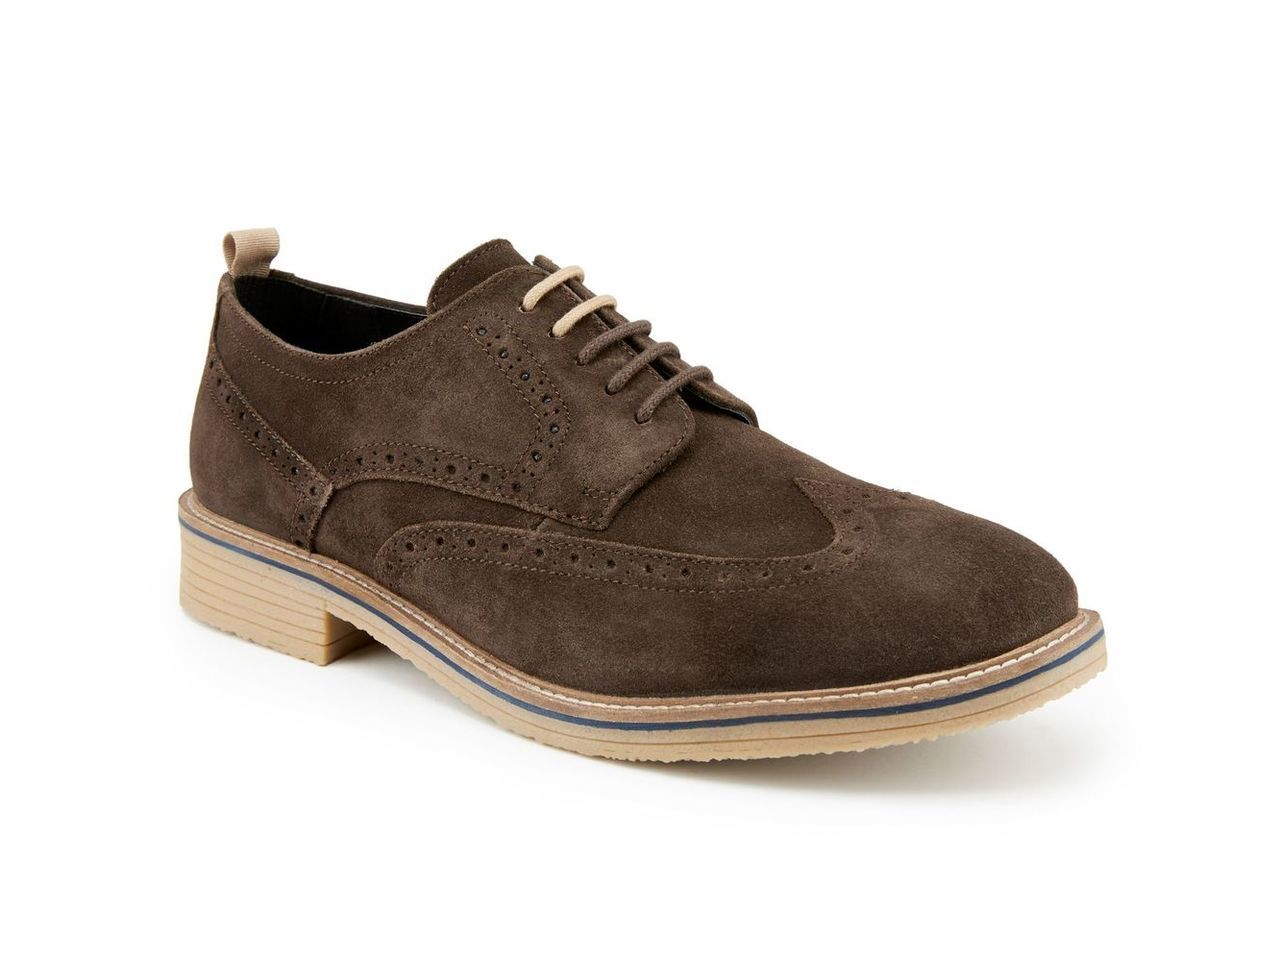 Skopes Suede Brogue Shoes, Brown